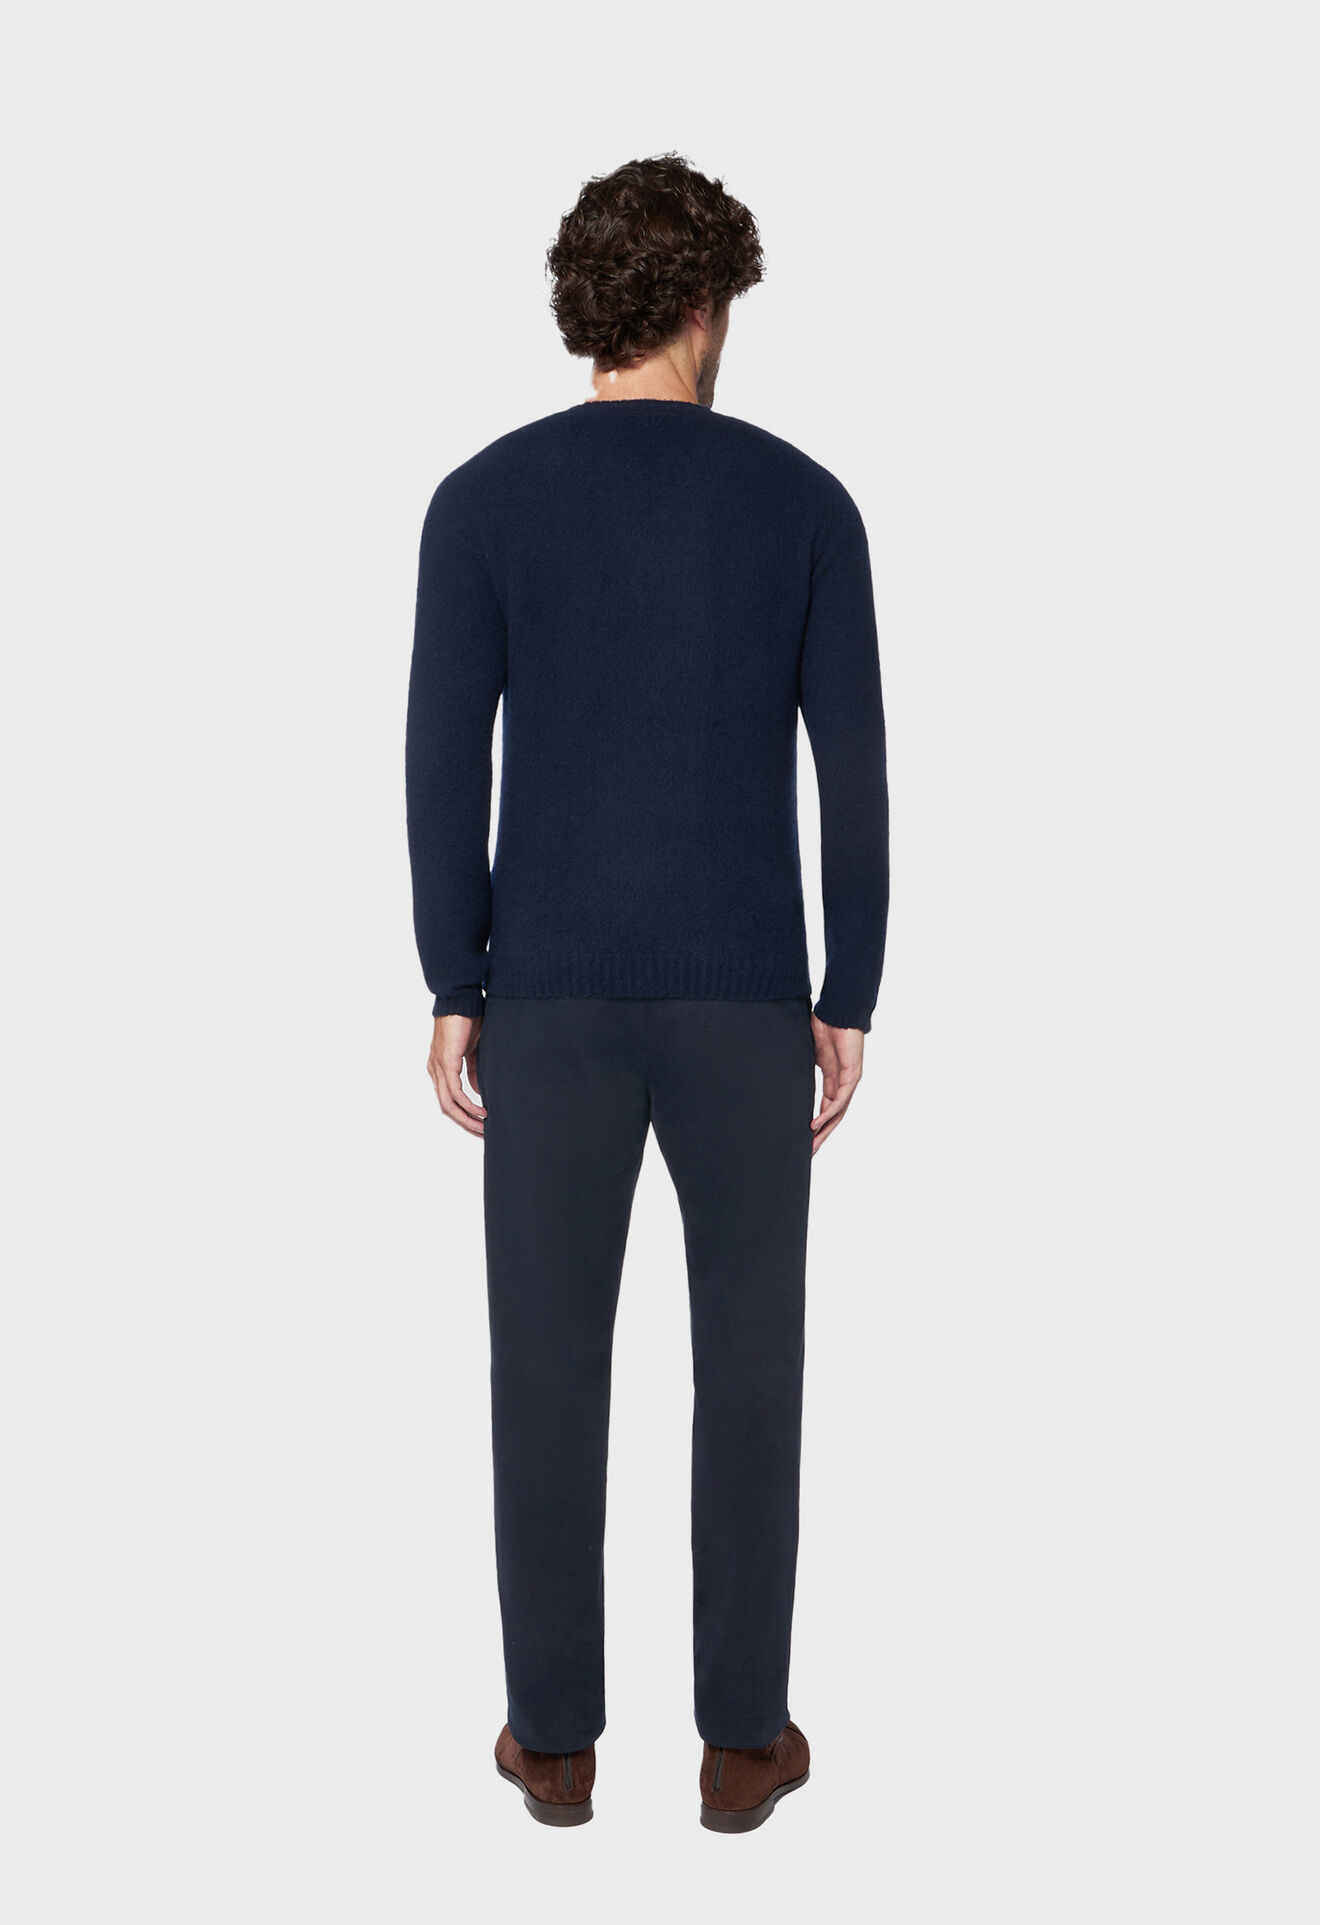 Wool and cashmere crewneck sweater in Dark blue: Luxury Italian